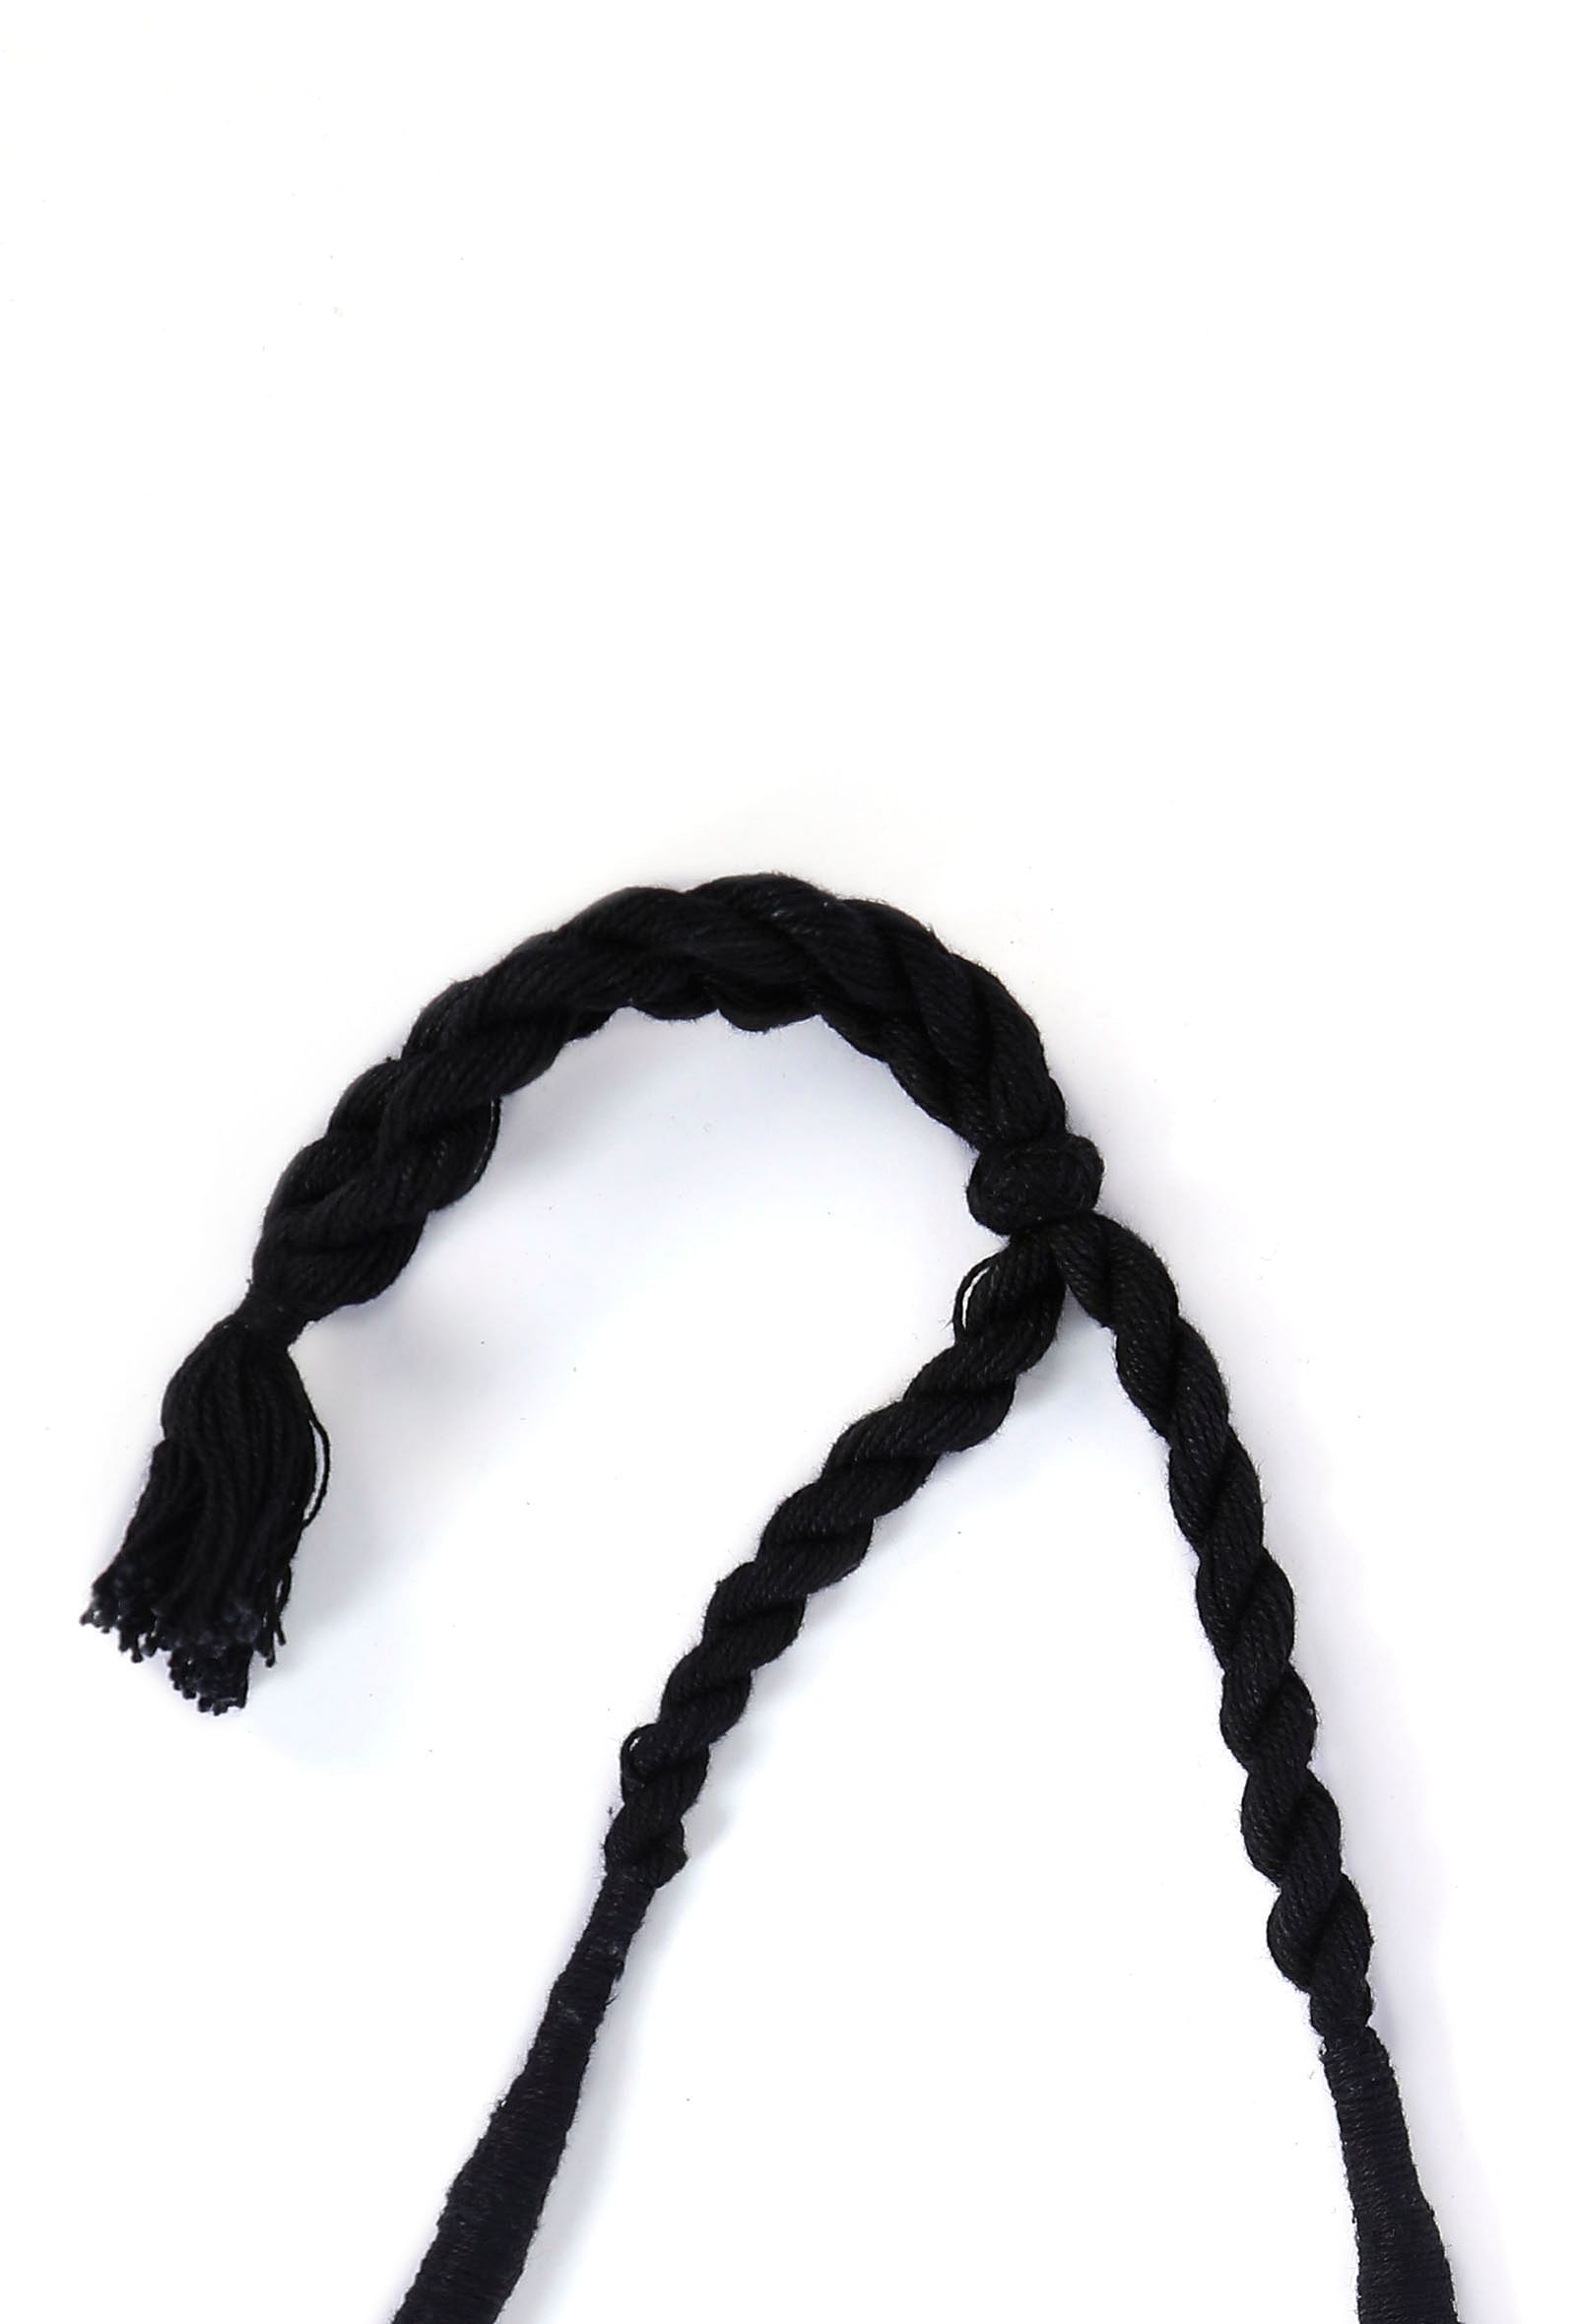 Kashvi Silver Black Thread Necklace